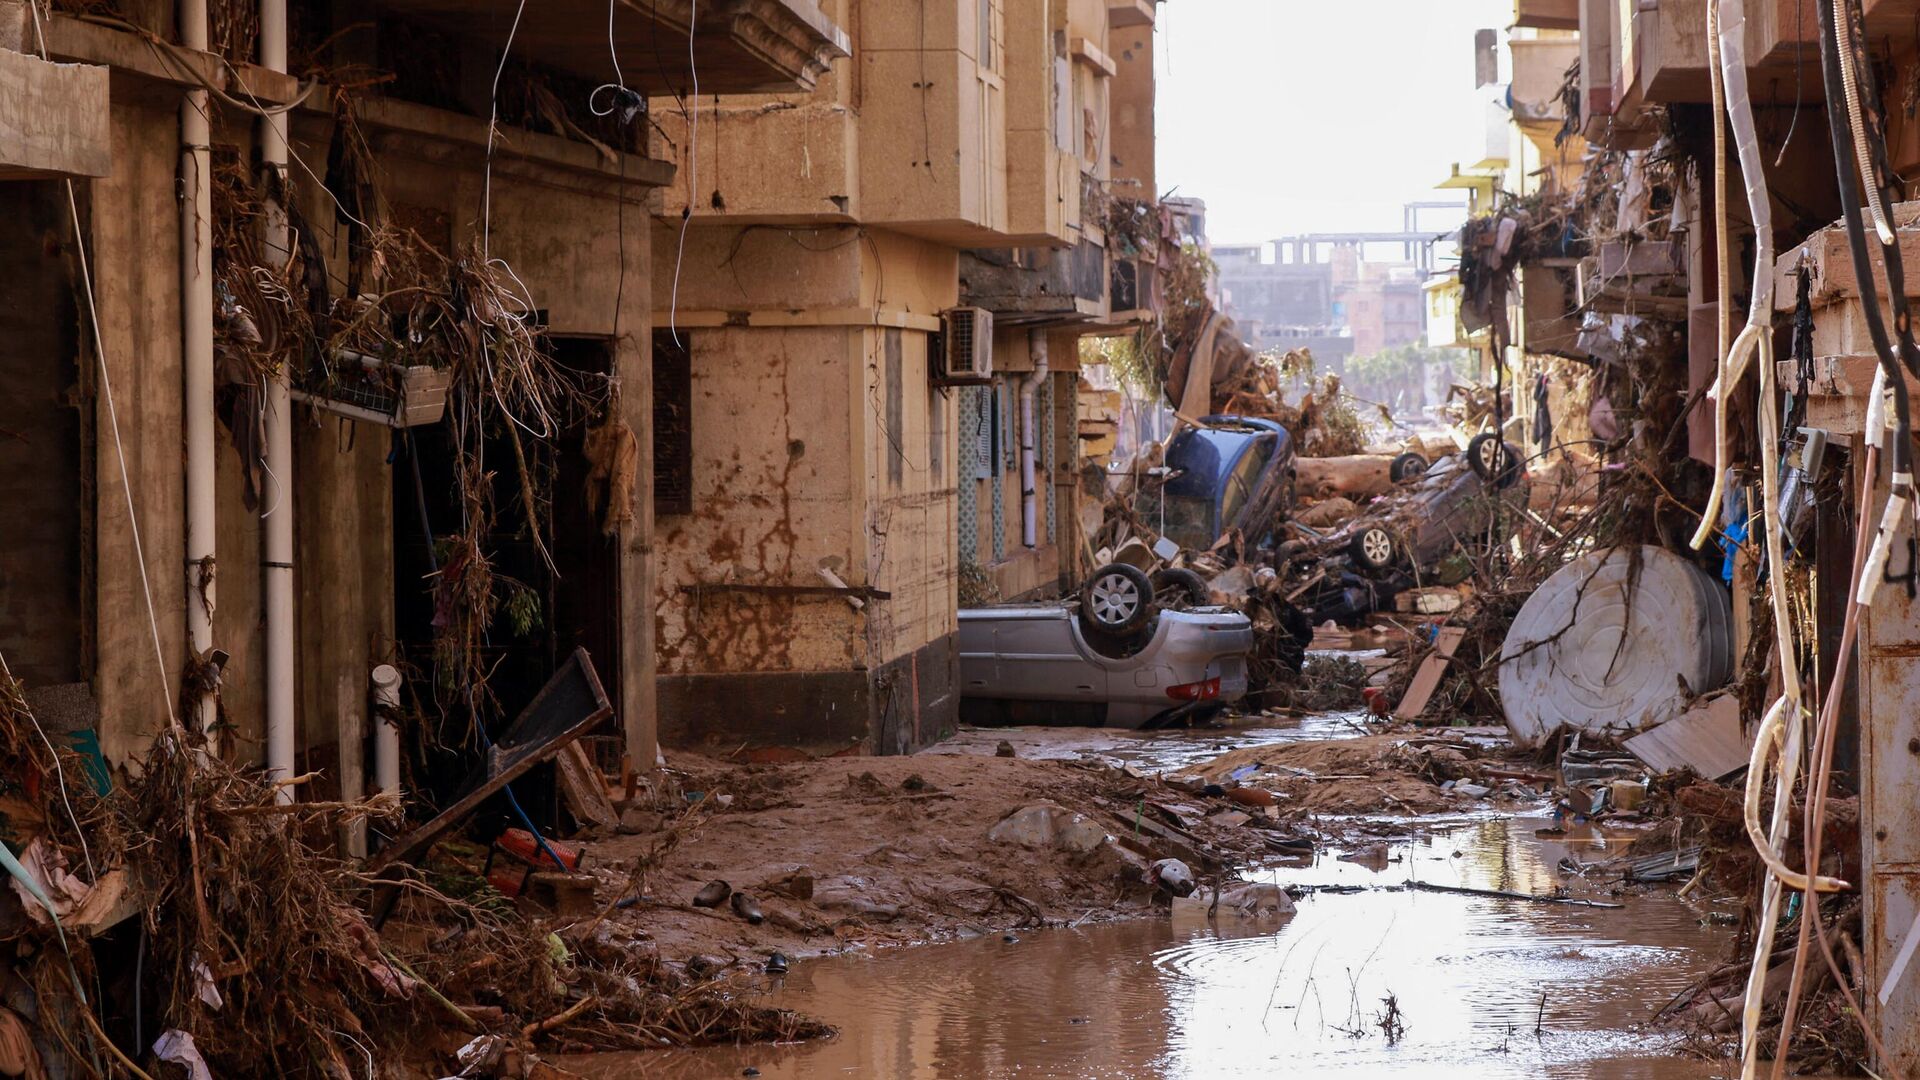 FLOOD DISASTER IN LIBYA